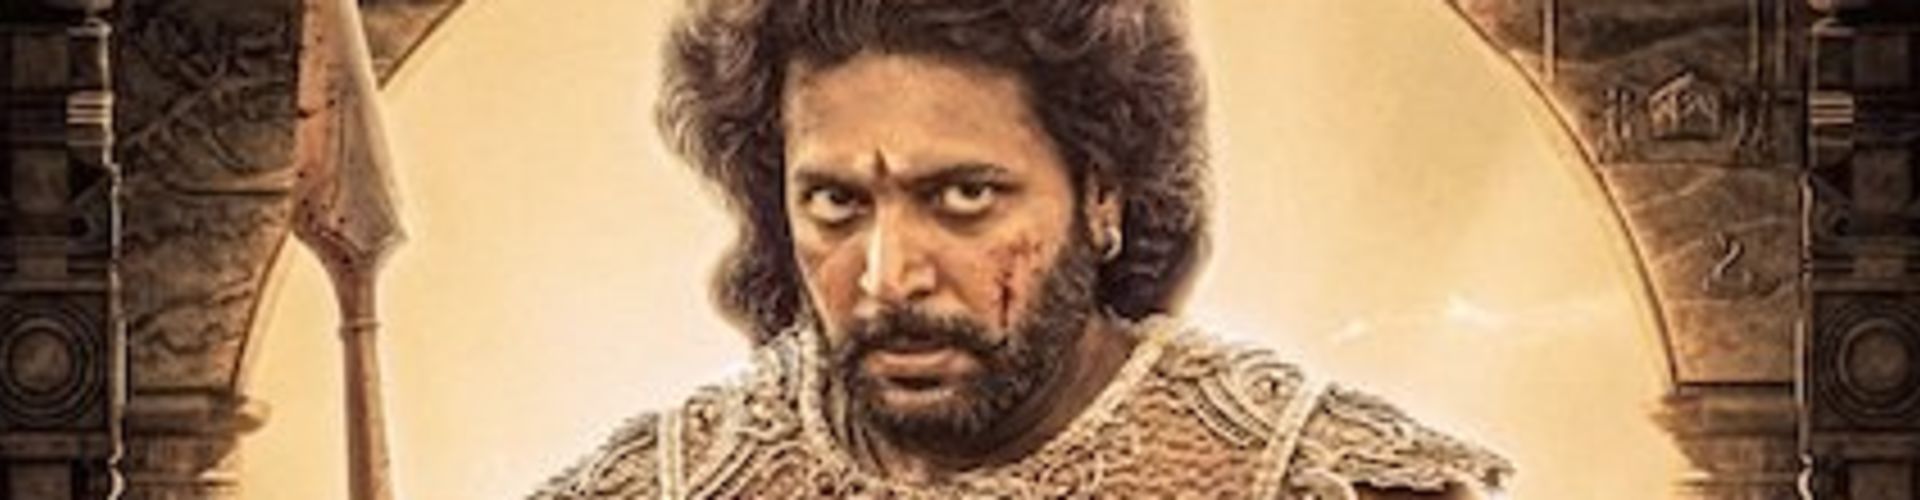 Jayam Ravi As The Great Raja Chola In PS1